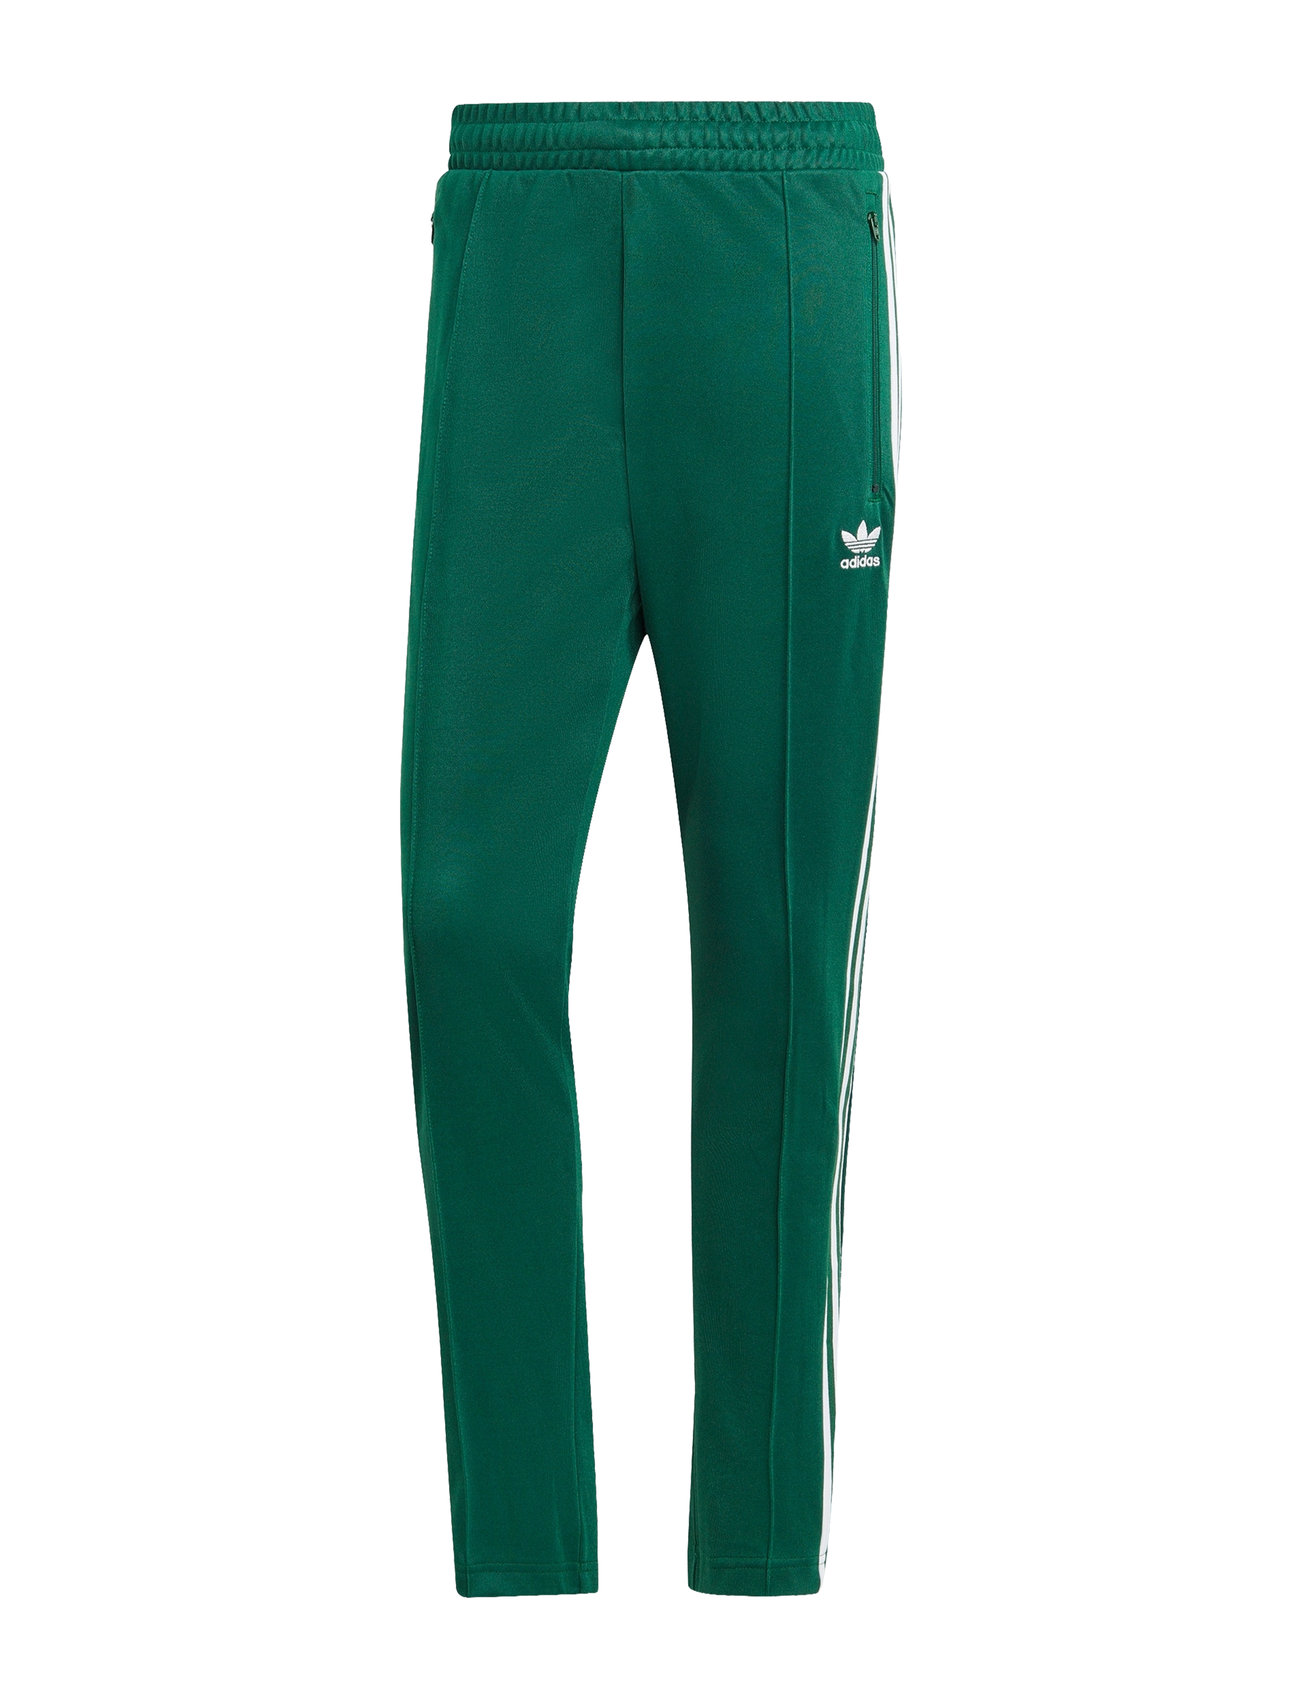 Adicolor Classics Beckenbauer Tracksuit Bottoms Sport Sport Pants Green Adidas Originals